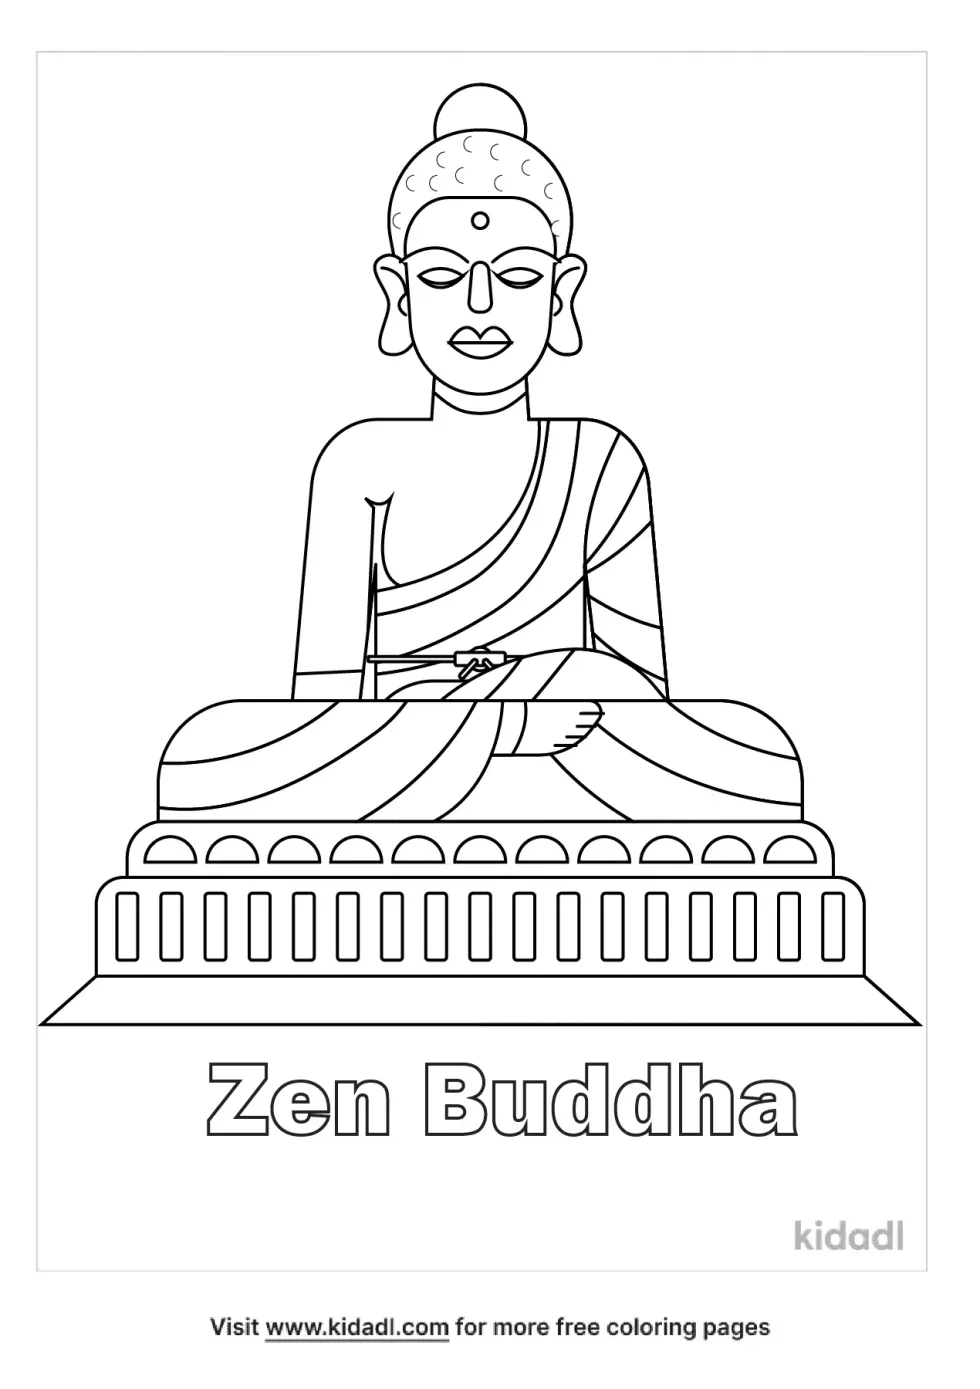 Zen Buddha Coloring Page